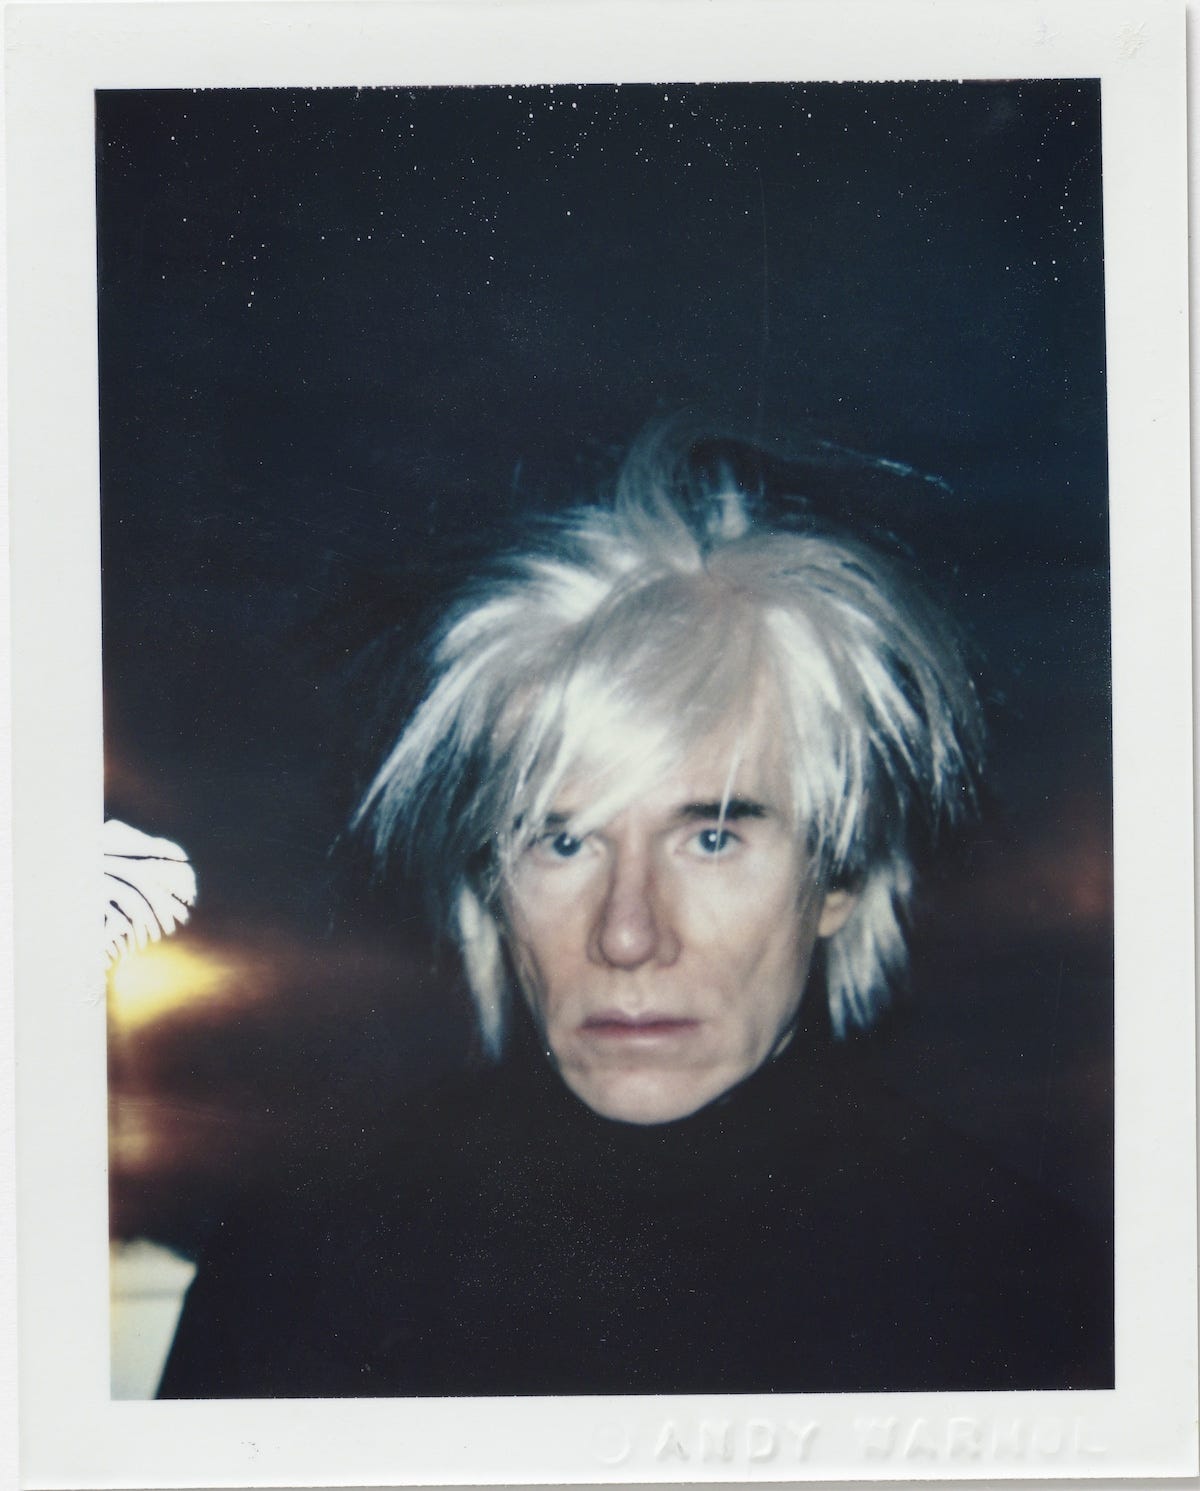 Andy Warhol’s Iconic Polaroid Portrait